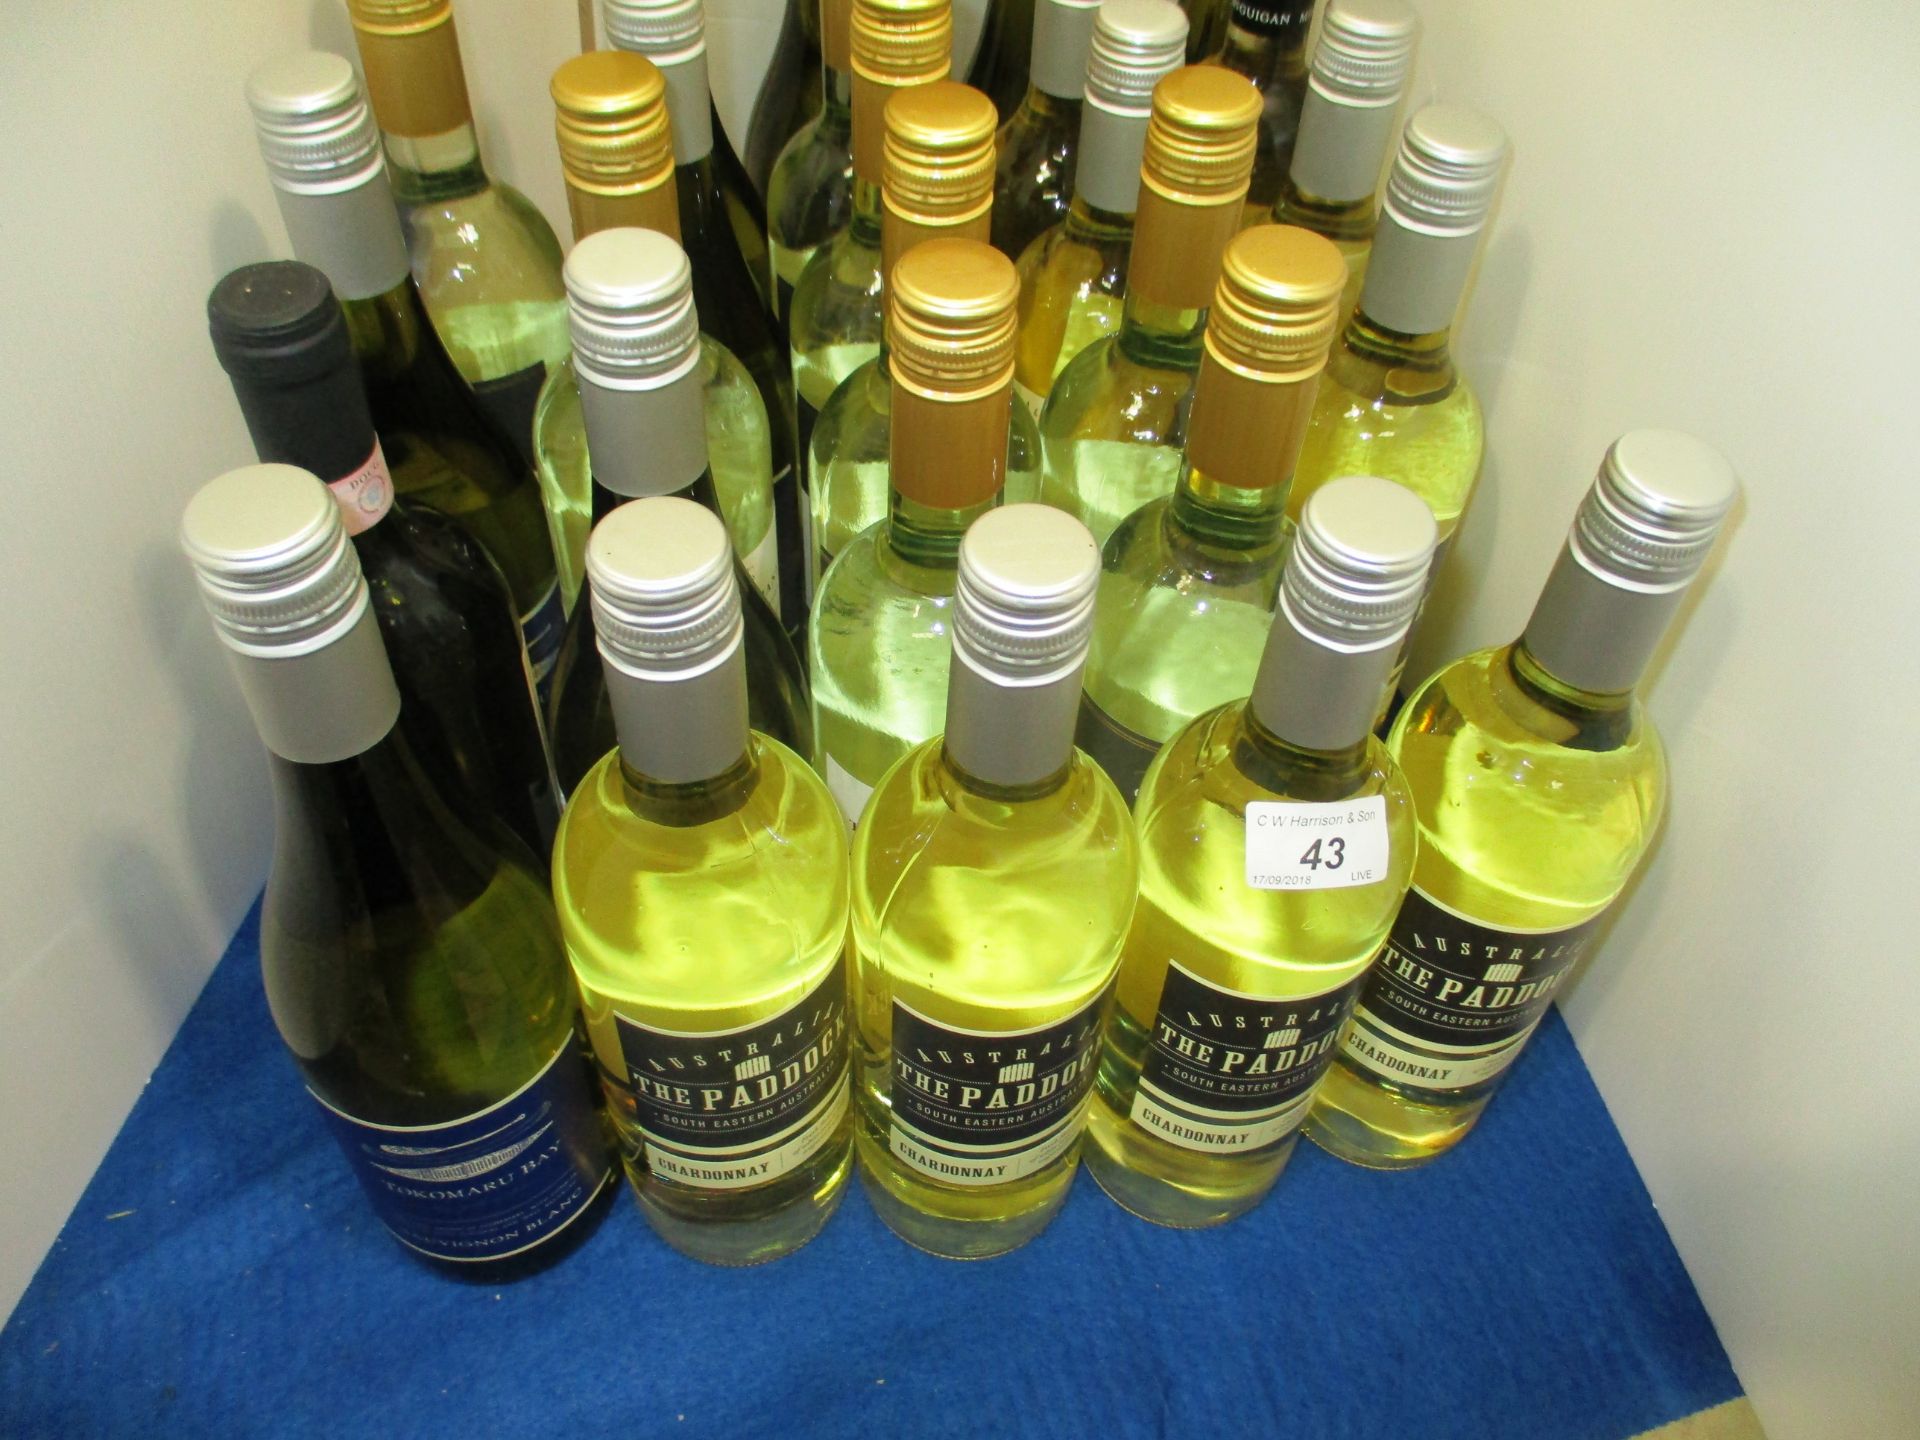 26 x 750ml/75cl bottles of assorted white wine - Paddock Australian Chardonnay,